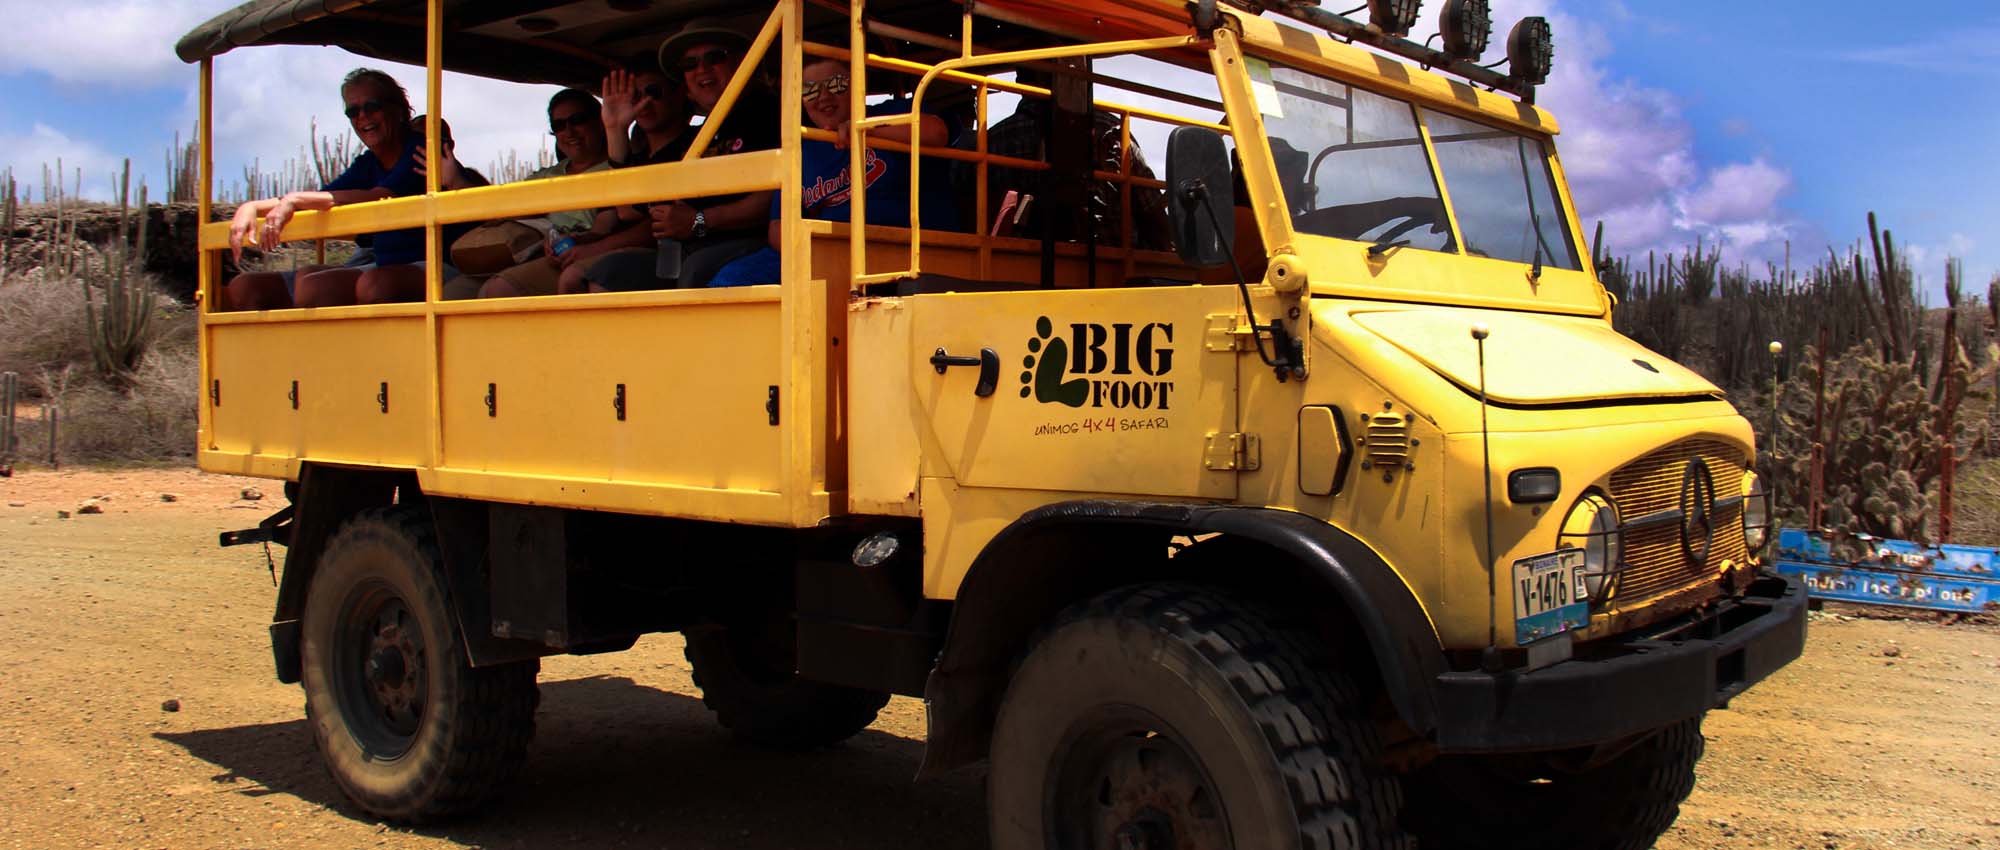 Bright yellow safari truck with people aboard